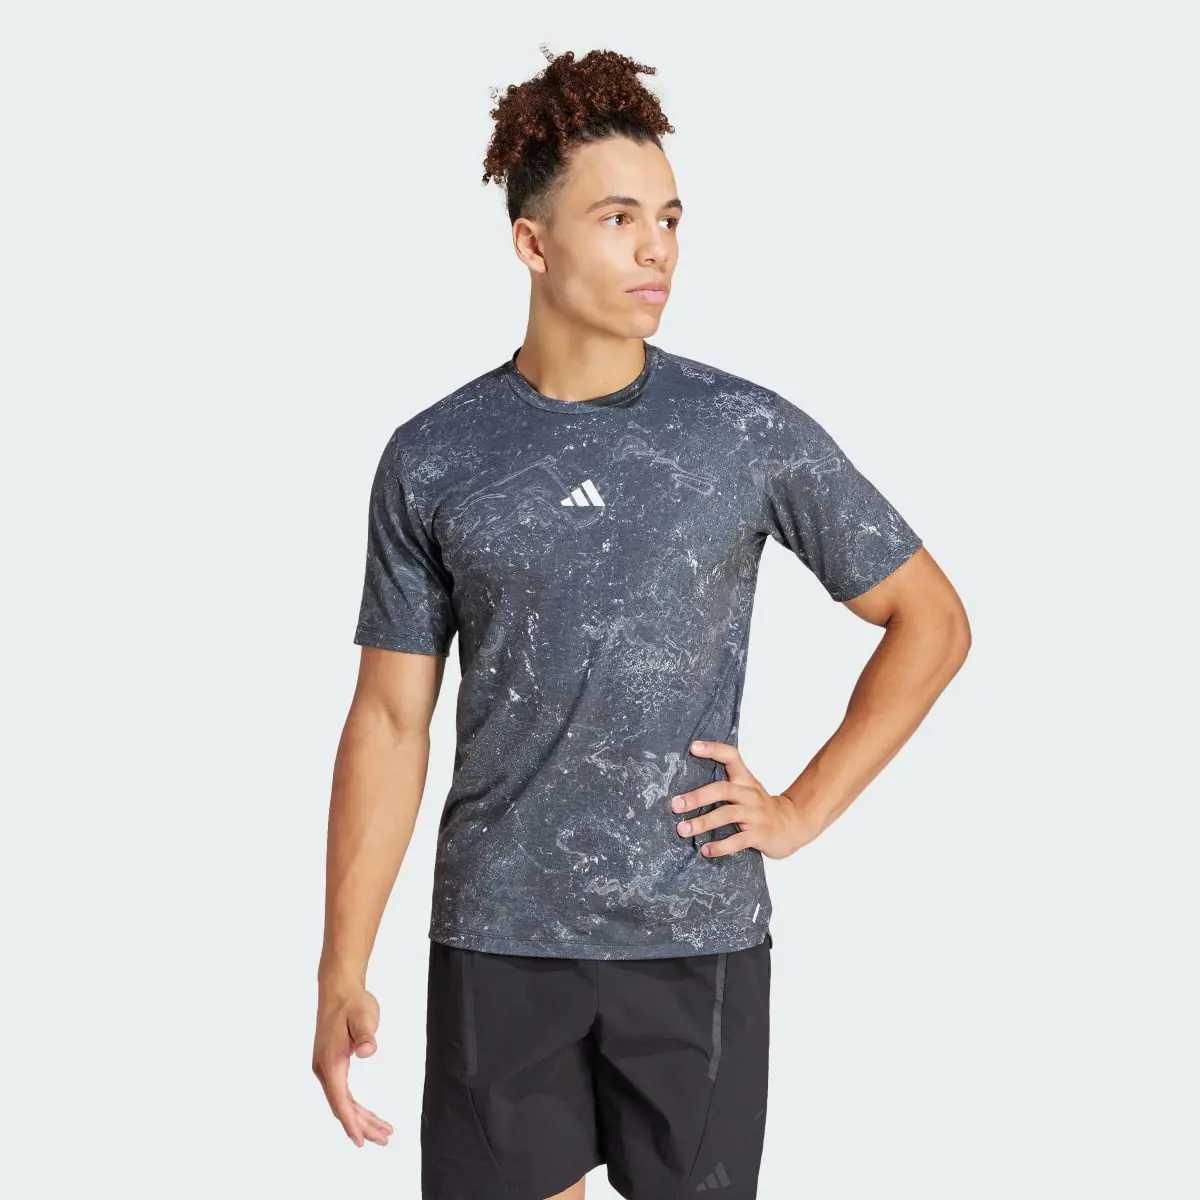 Adidas Power Workout T-Shirt. 2